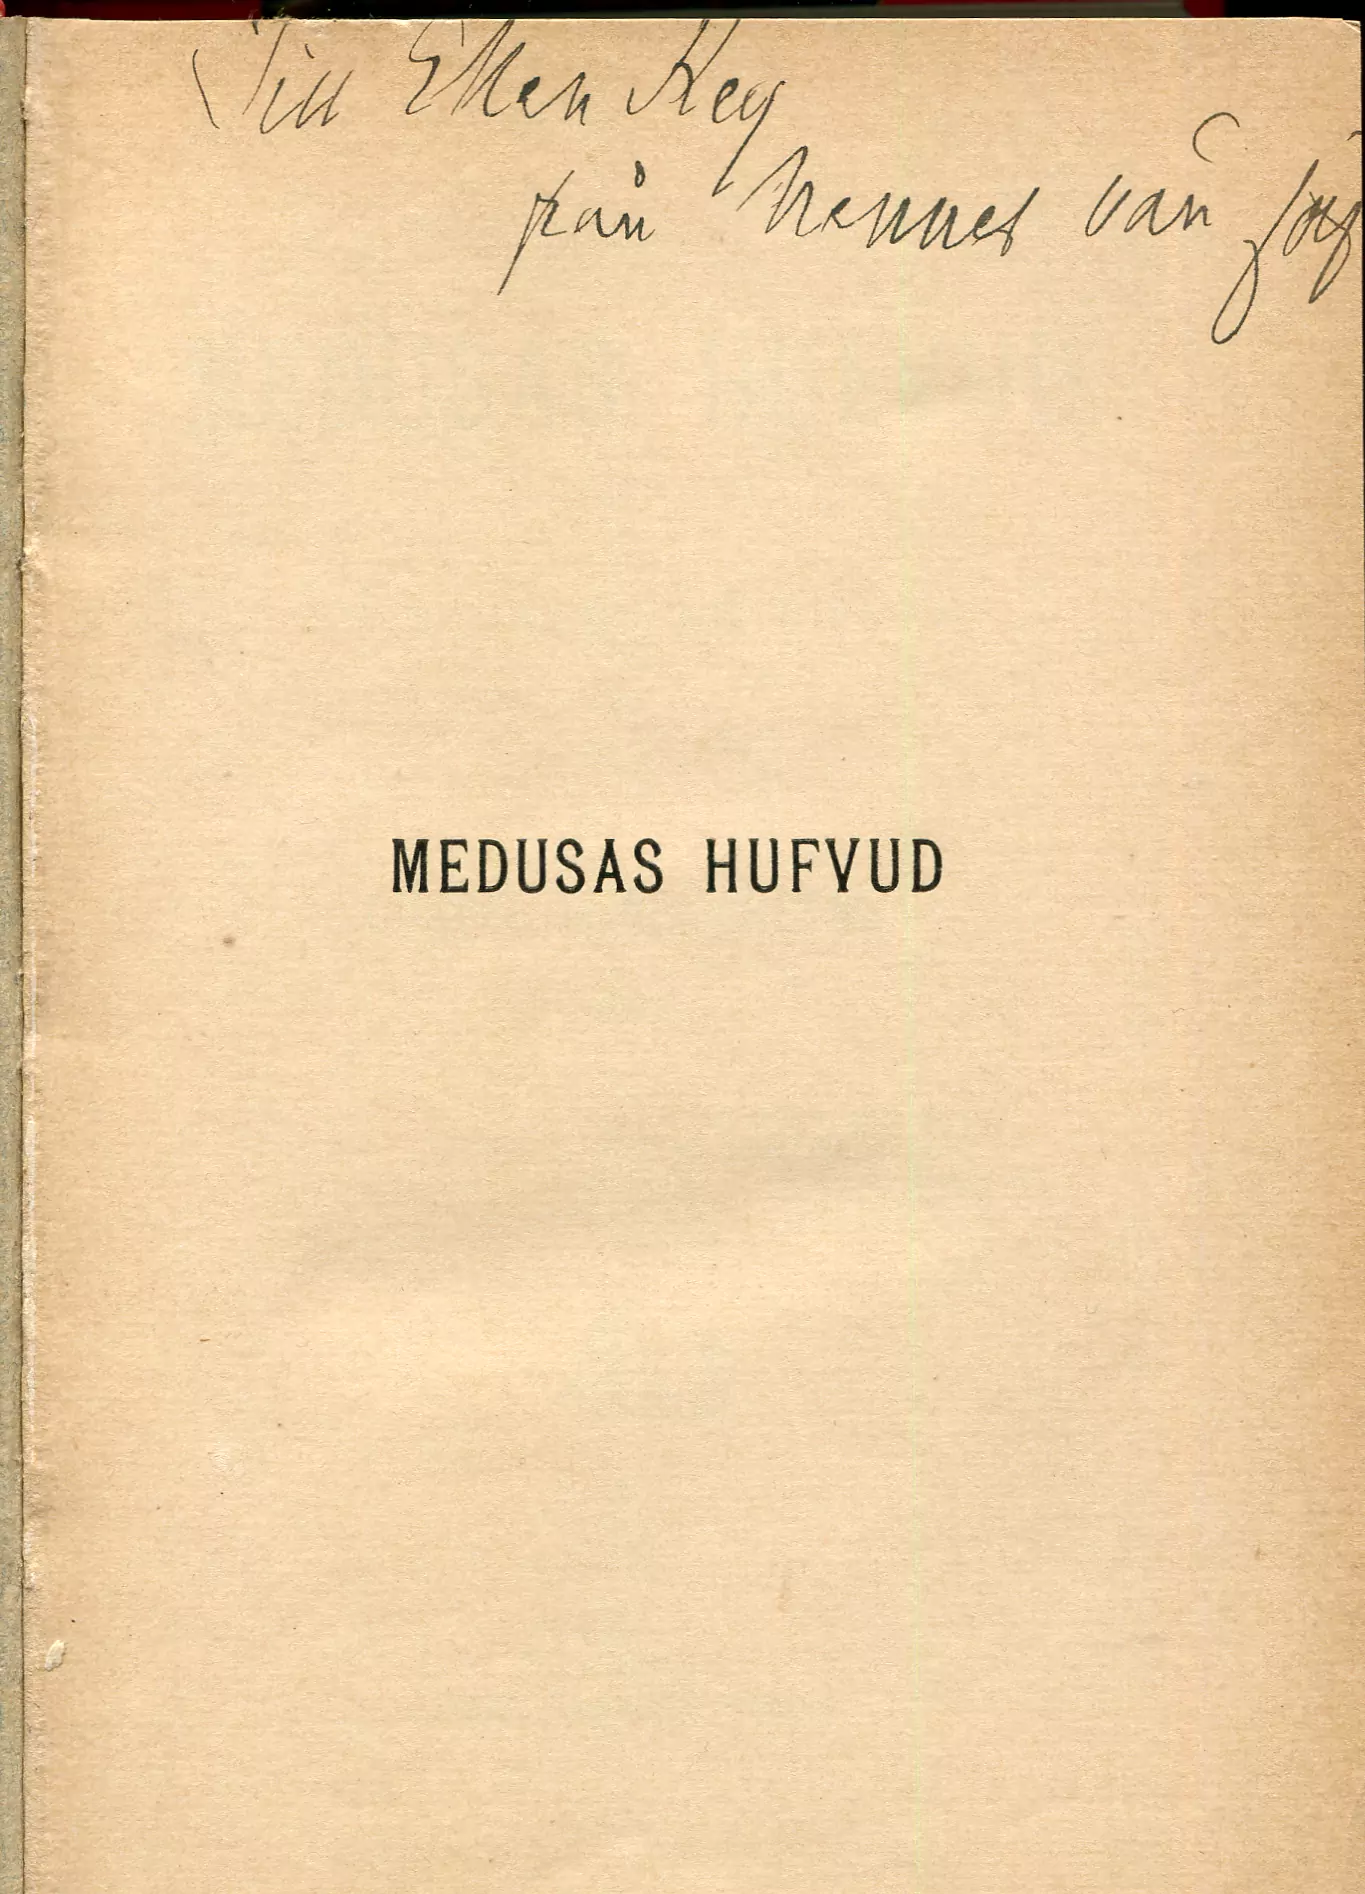 Medusas hufvud , Stockholm 1895